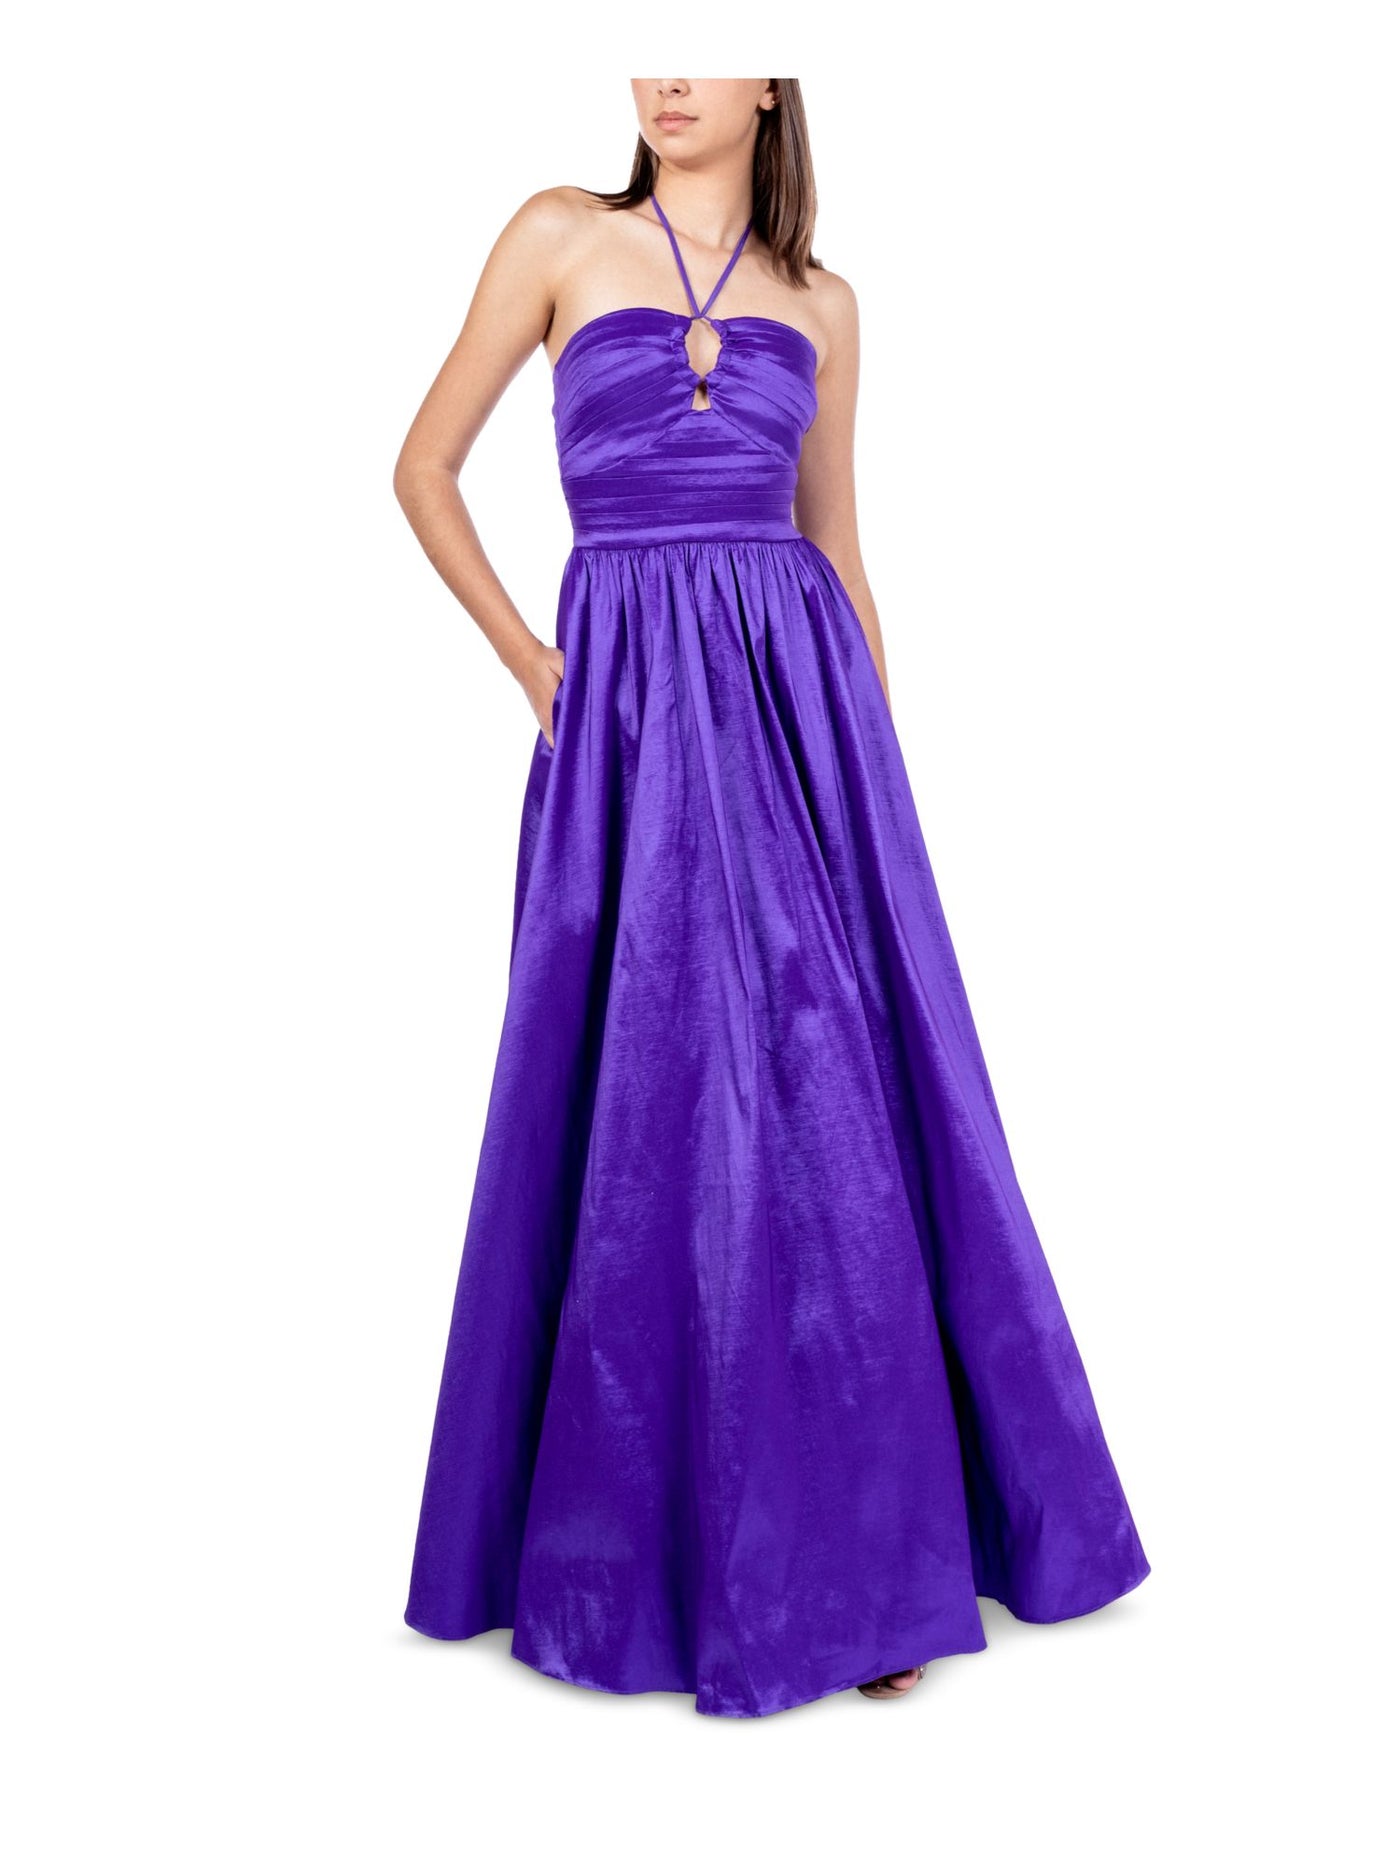 B DARLIN Womens Purple Pleated Tie Taffeta Keyhole Front Lined Sleeveless Halter Prom Gown Dress Juniors 15\16